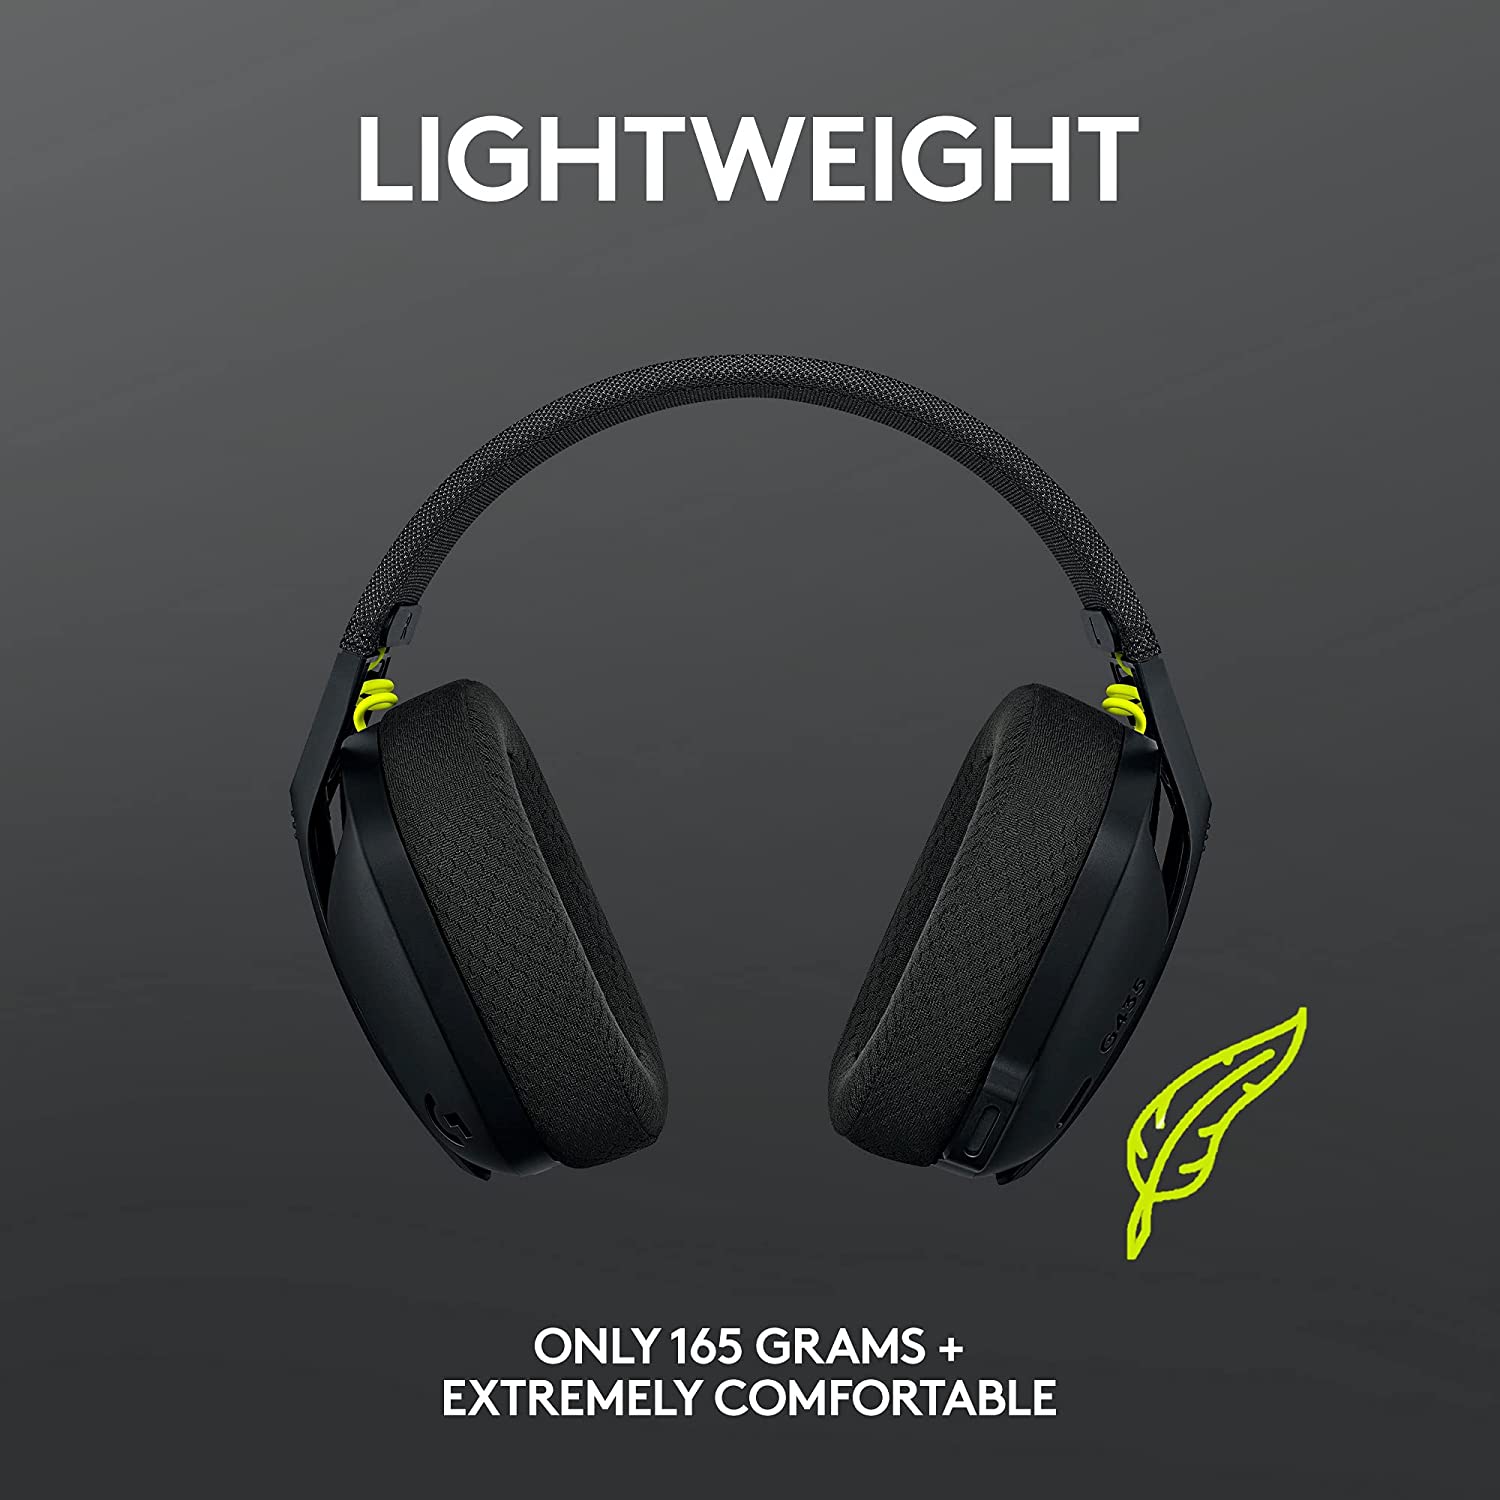 Logitech G435 Wireless Gaming Headset Black